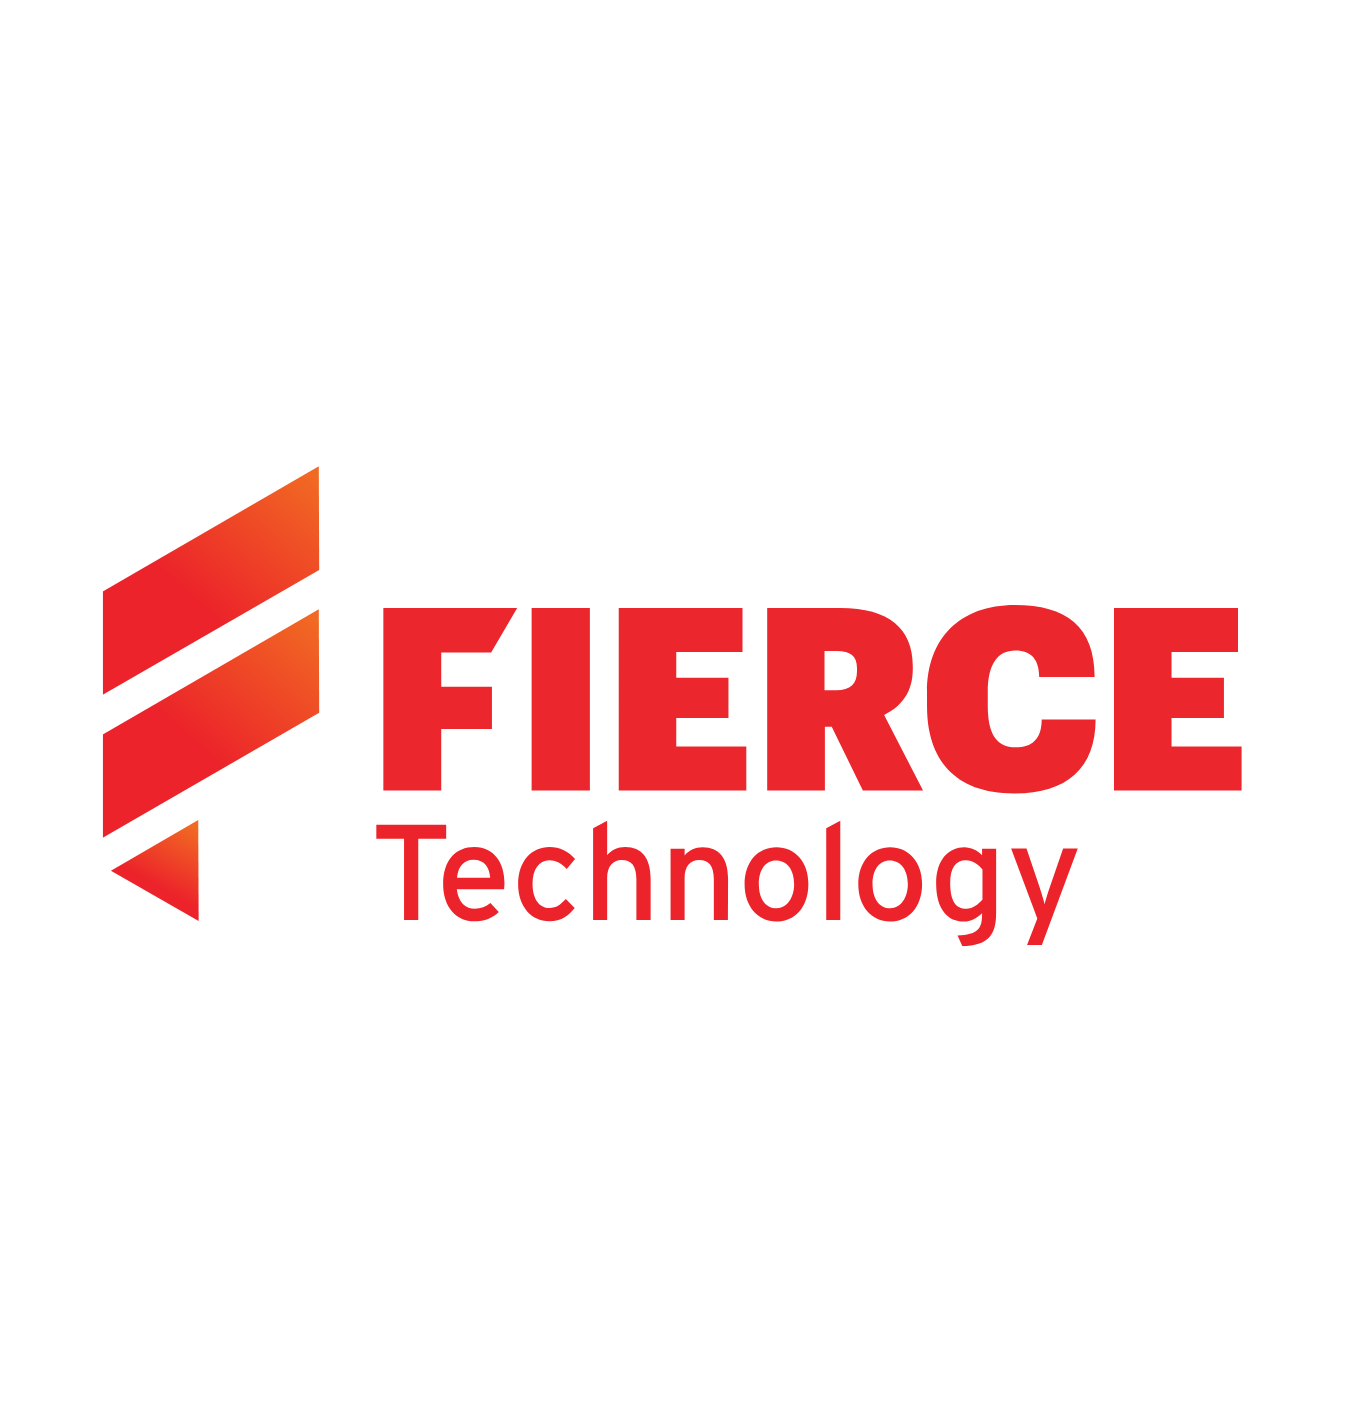 Fierce Technology